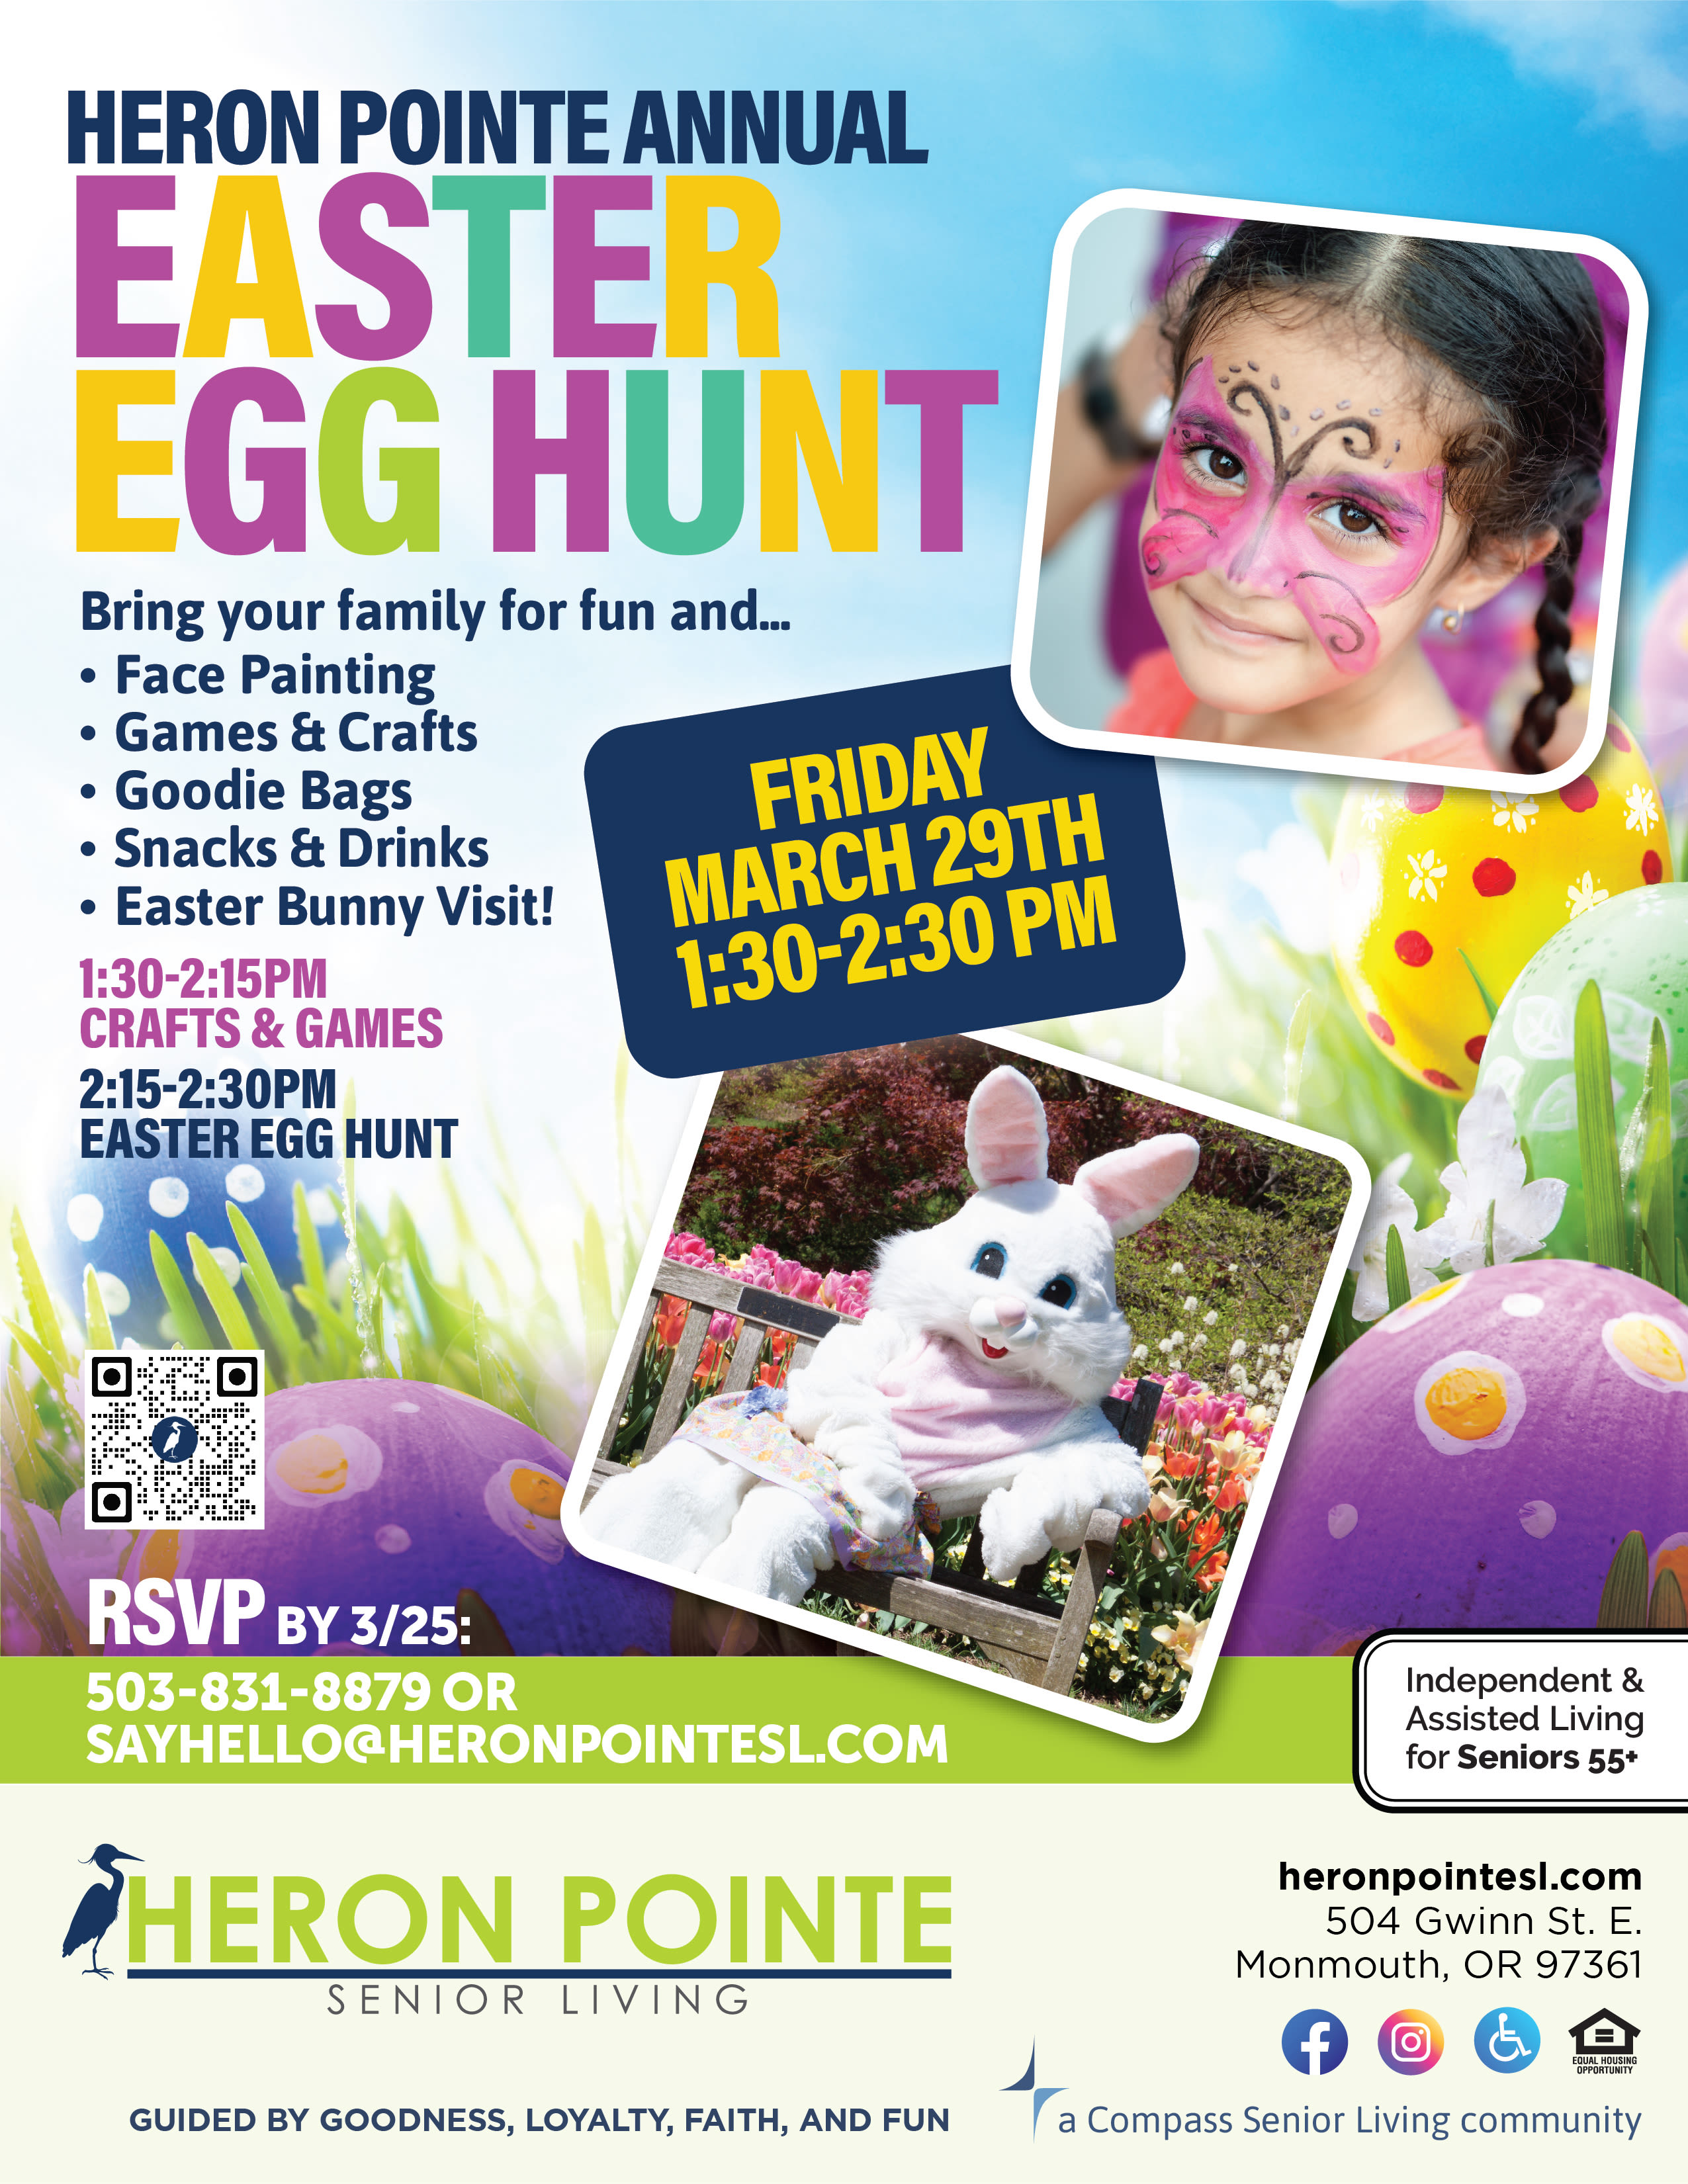 Easter Egg Hunt at Heron Pointe Senior Living in Monmouth, Oregon